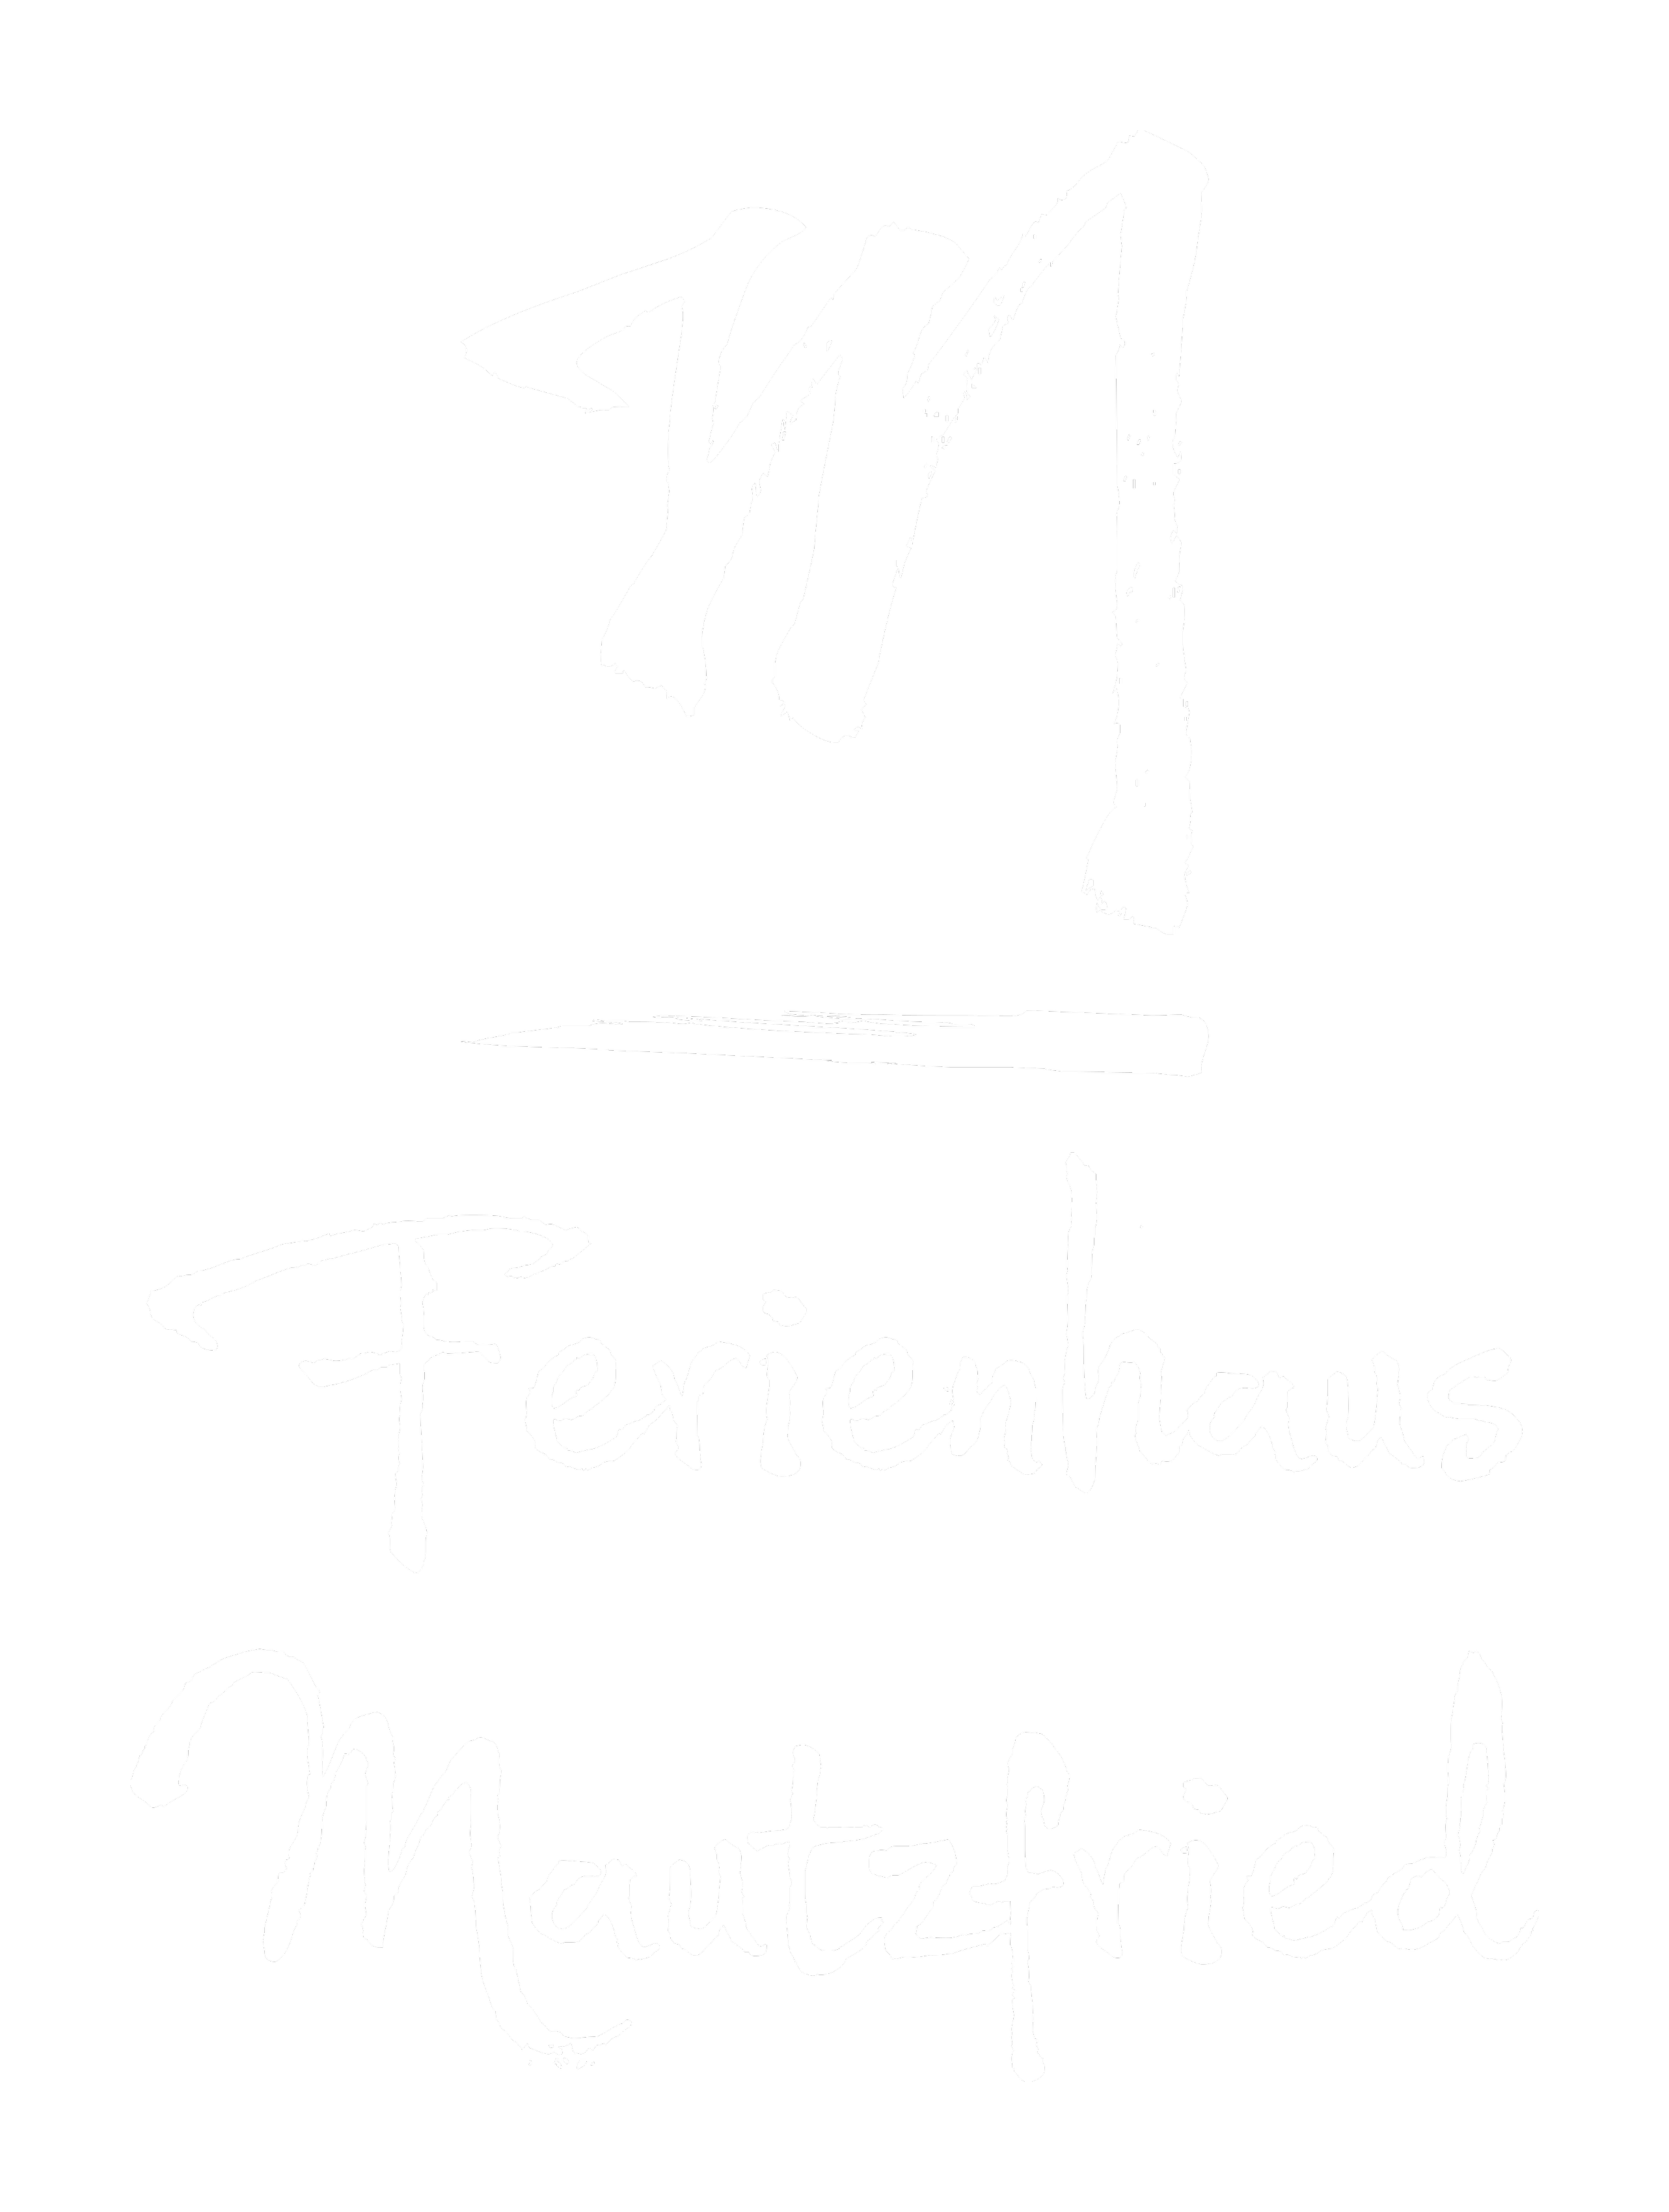 Ferienhaus Mautzfried